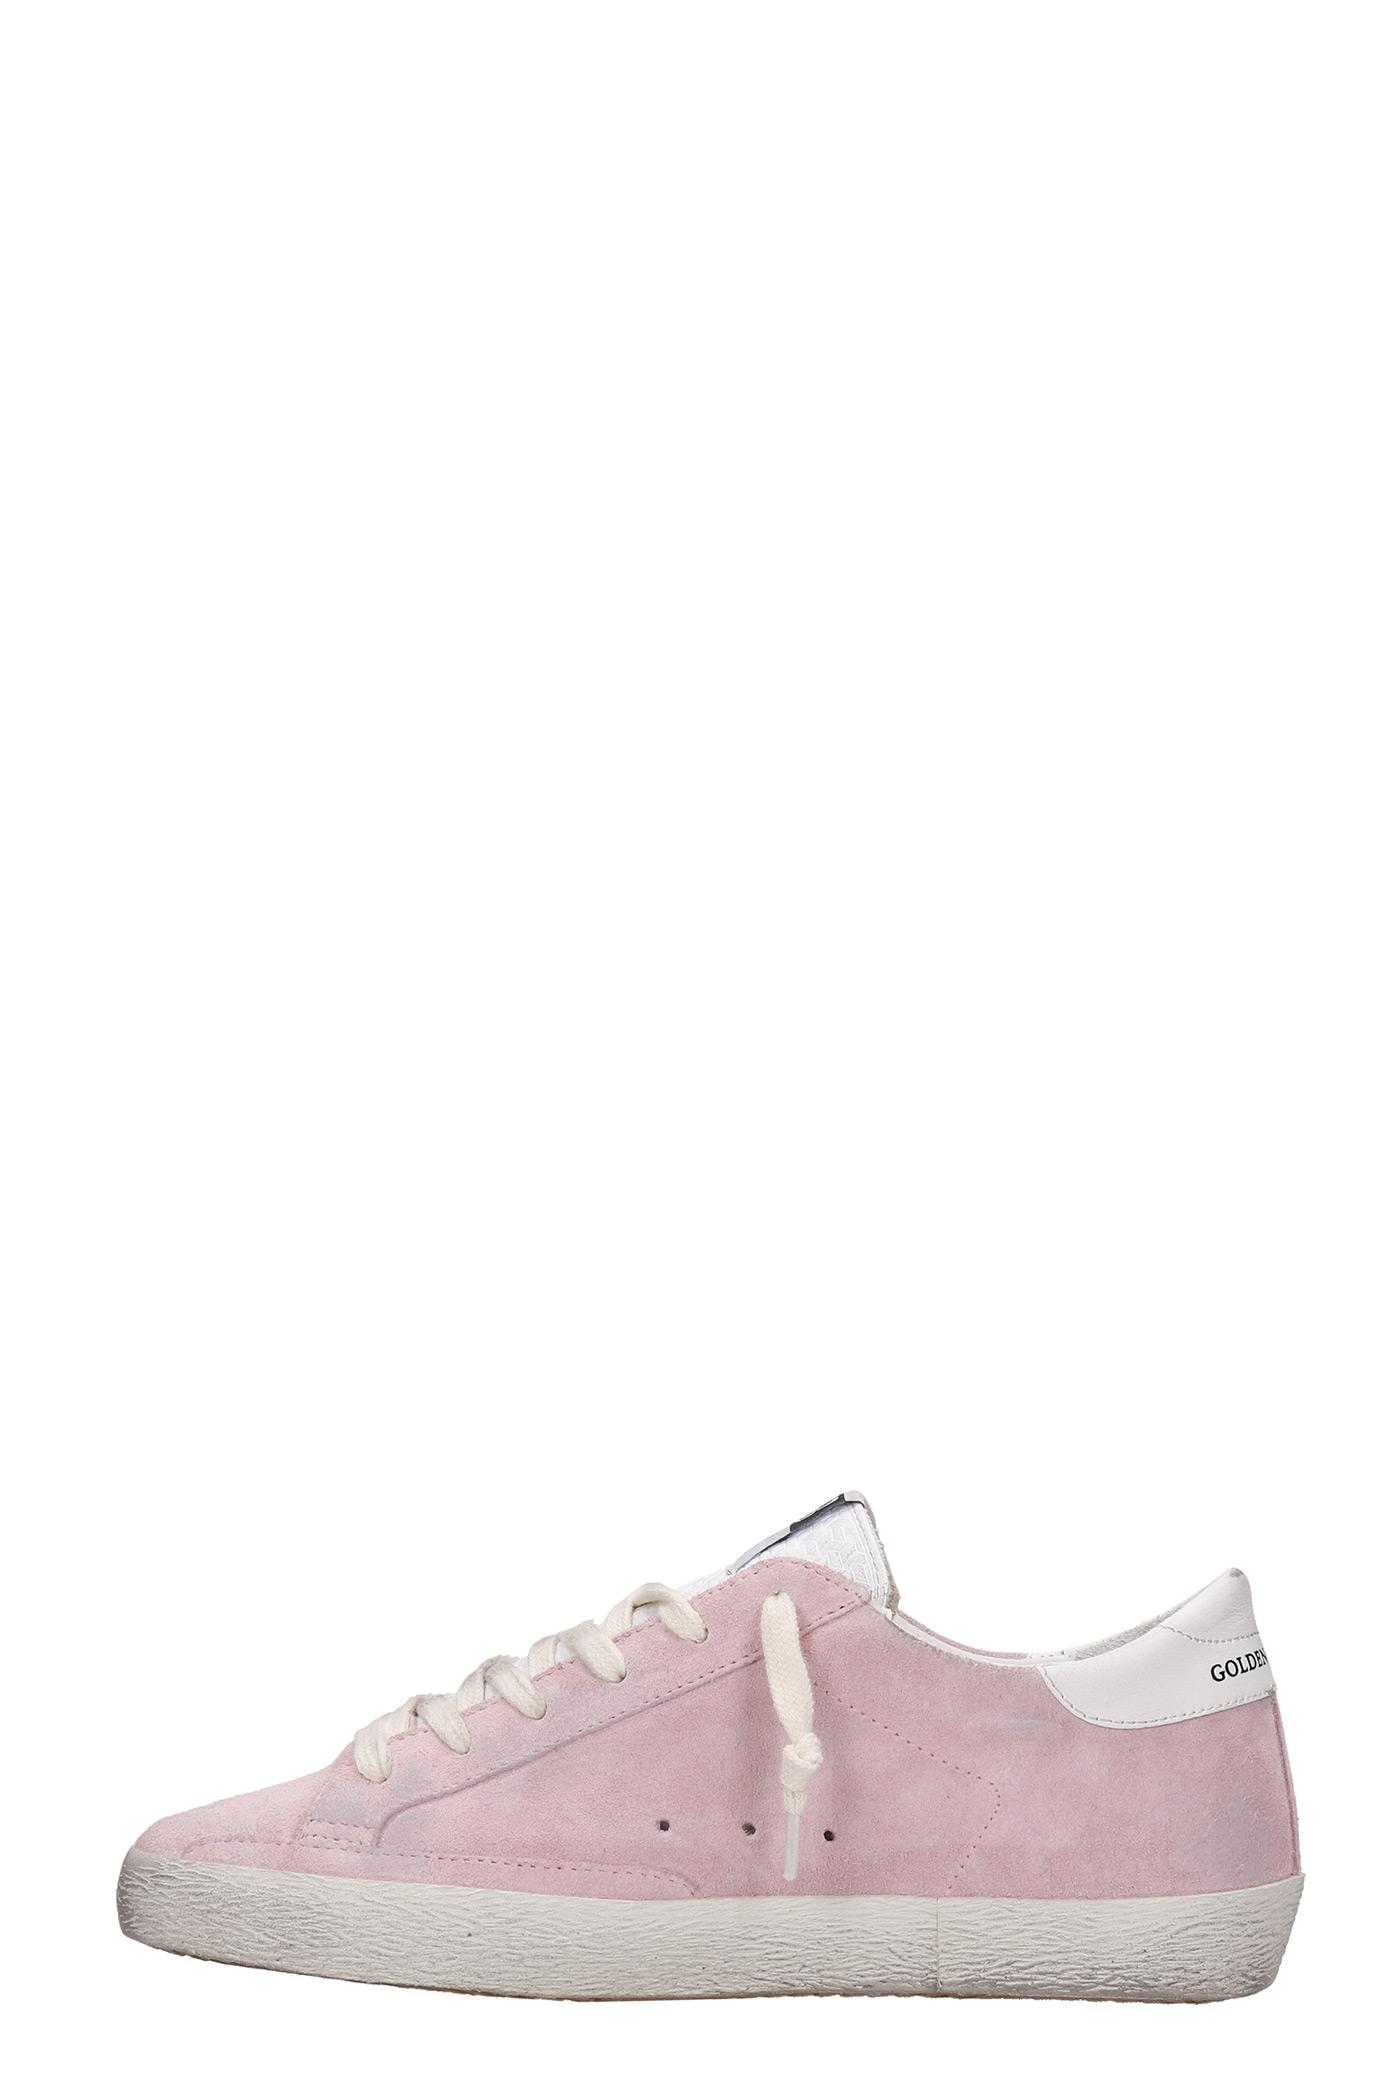 Golden Goose Superstar Sneakers In Rose-pink Suede - Save 22% | Lyst